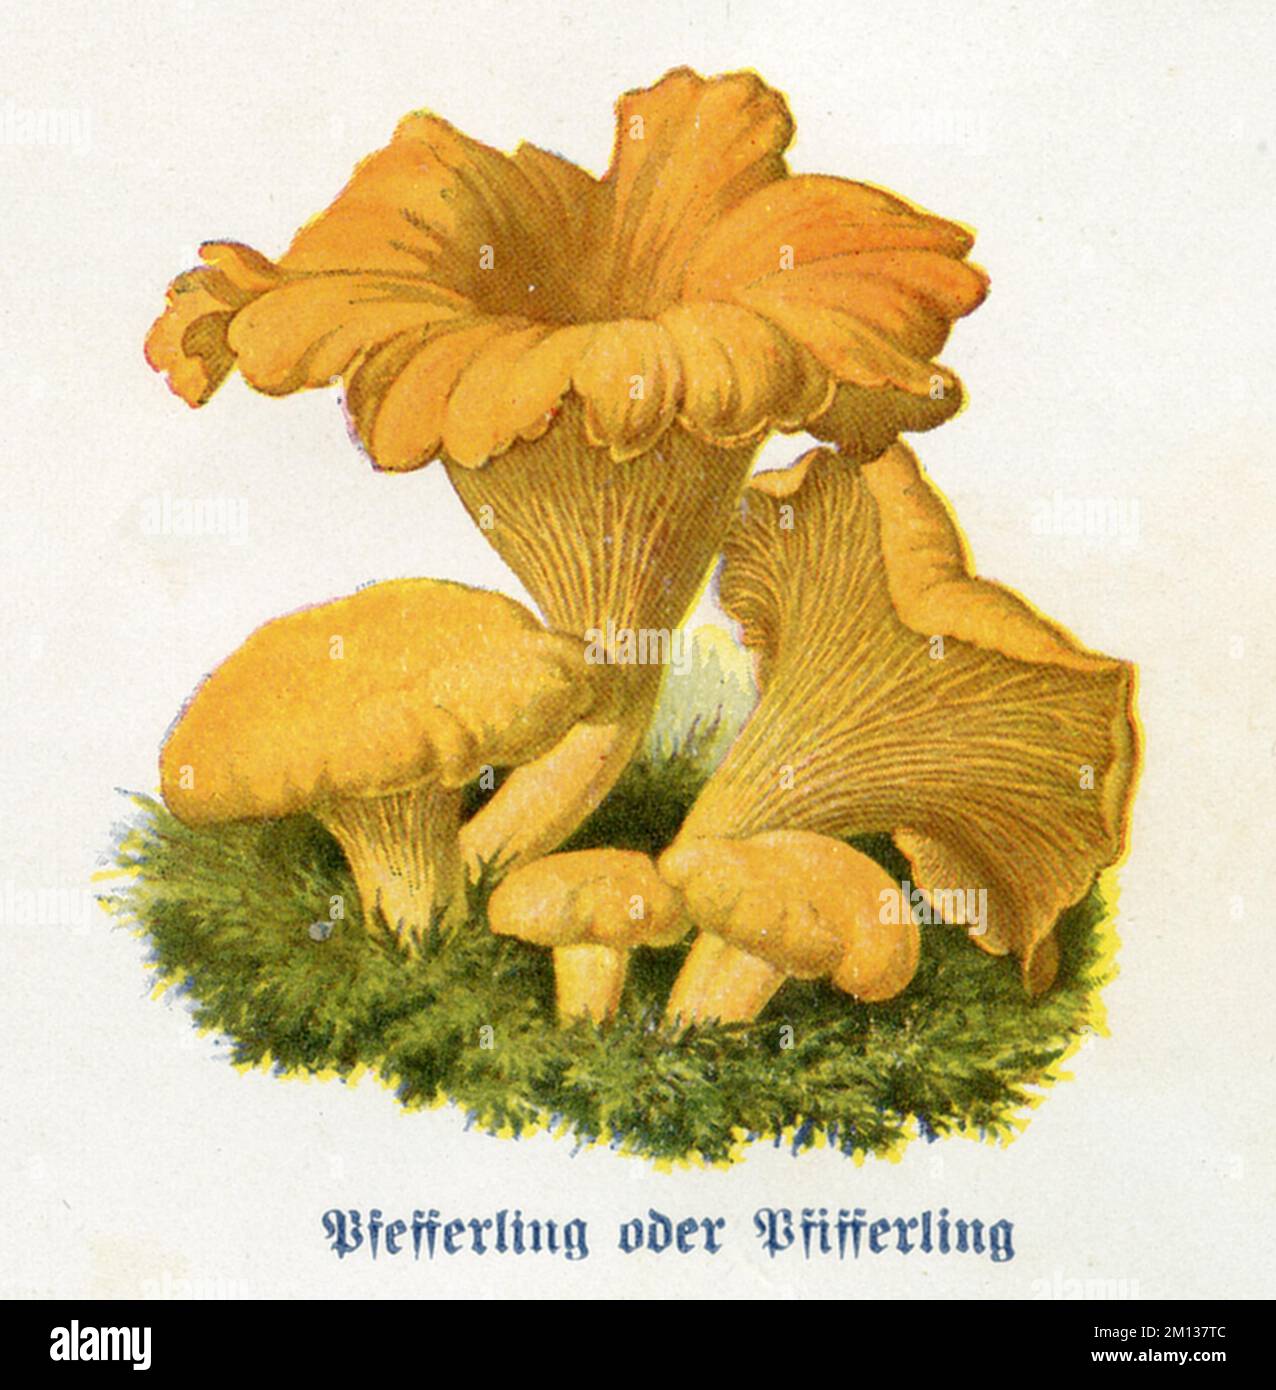 Pfifferling, goldene Pfifferelle oder girolle Cantharellus cibarius (Haushaltsbuch, 1912), Pfifferling Stockfoto